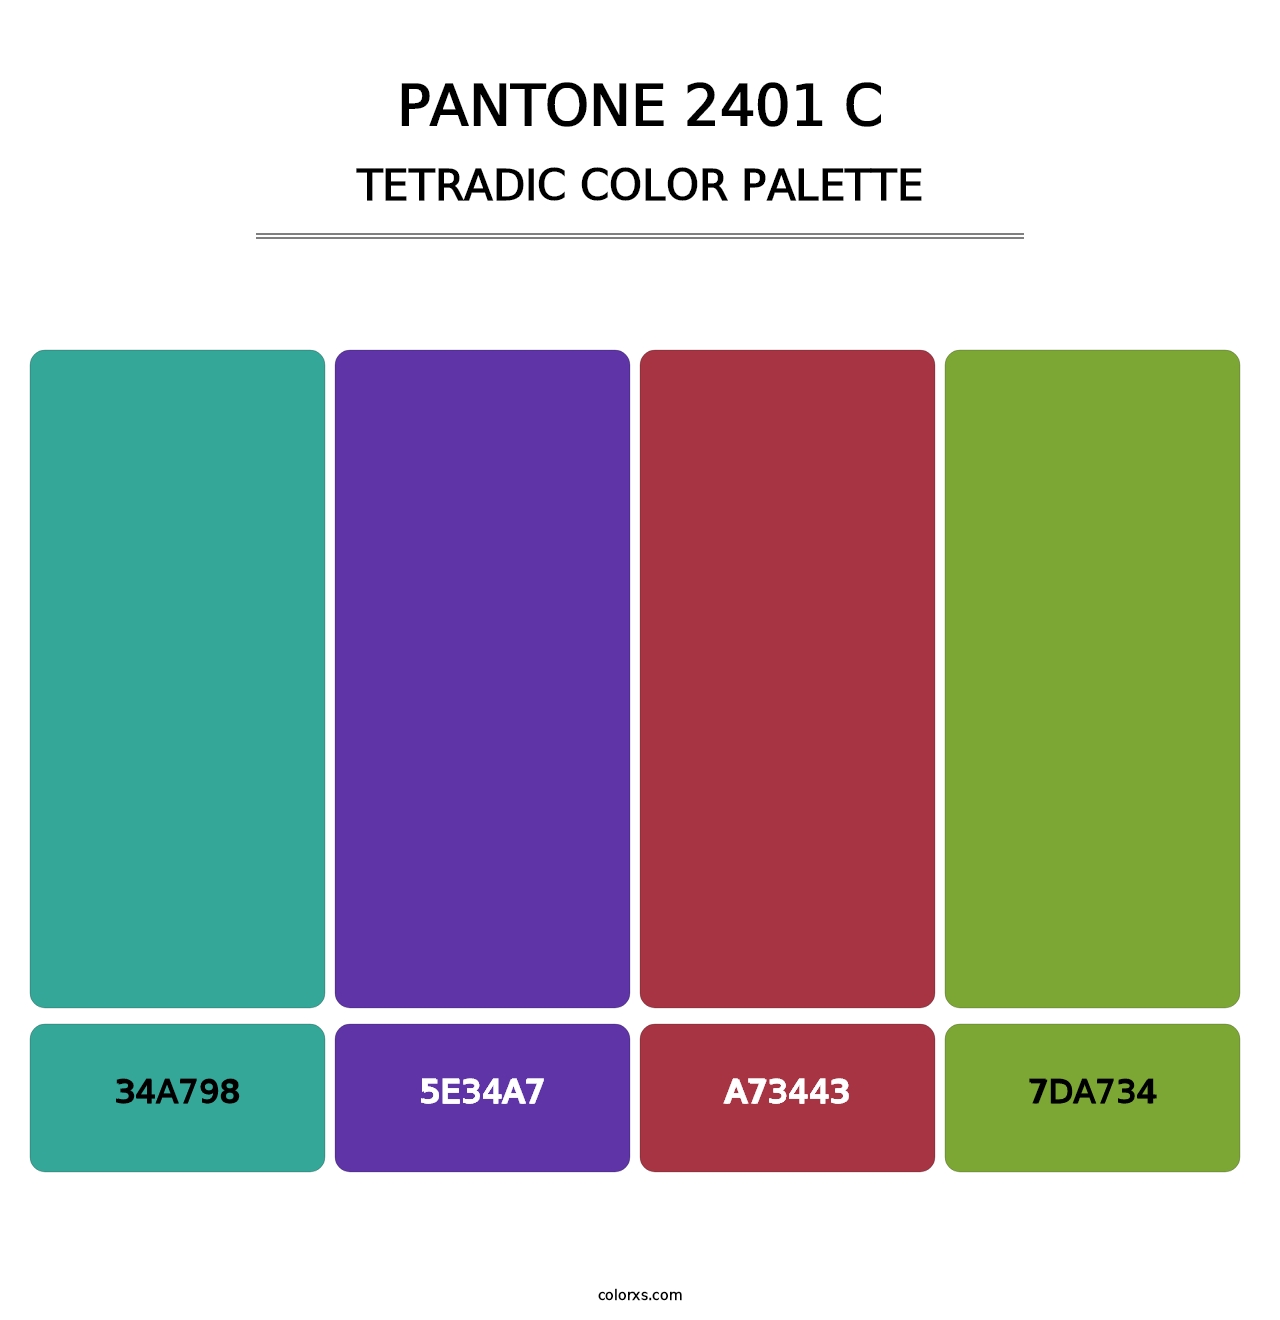 PANTONE 2401 C - Tetradic Color Palette